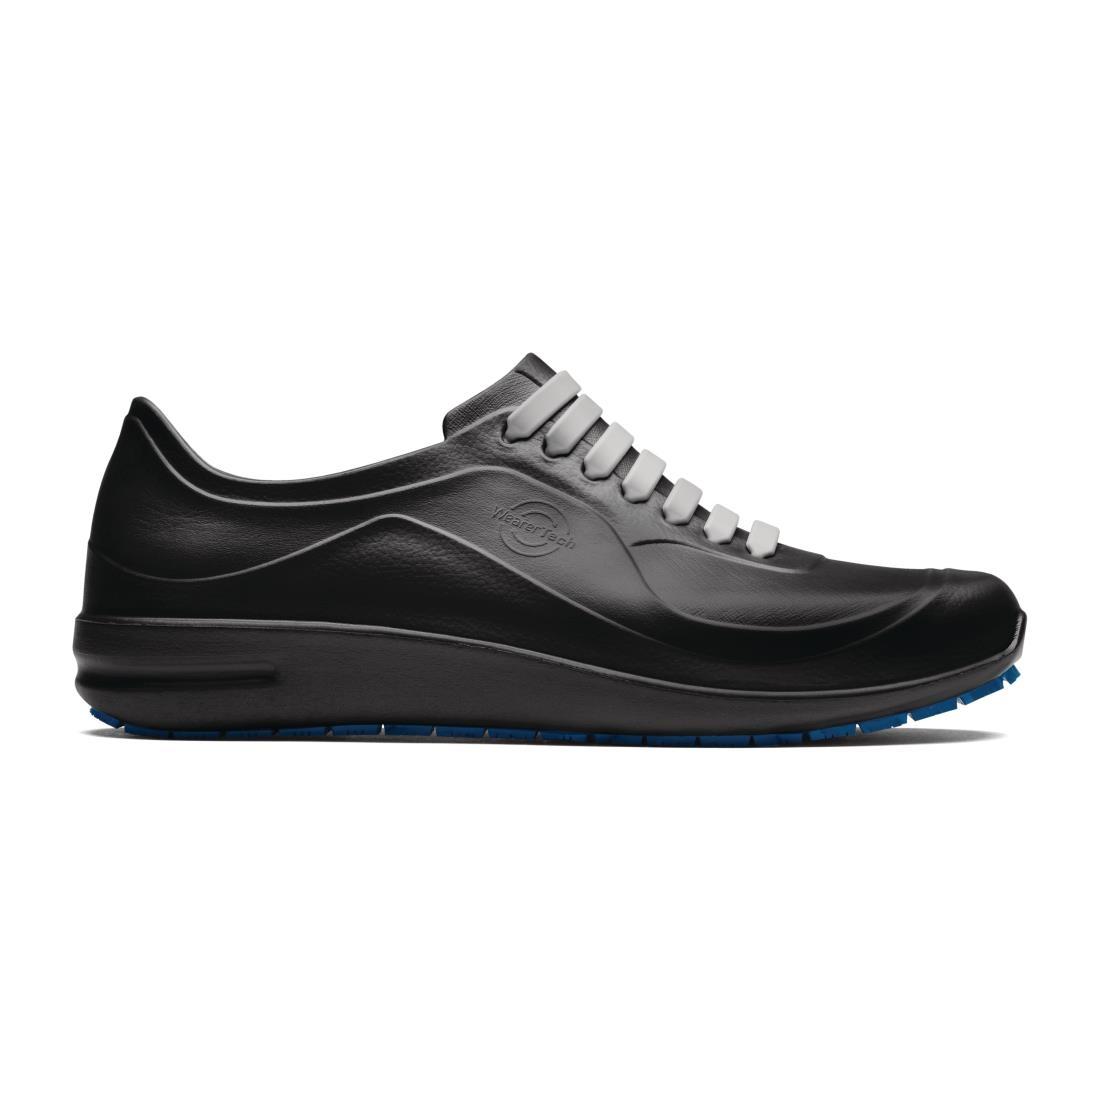 WearerTech Unisex Energise Black Safety Shoes Black 4 - BB190-37  - 3